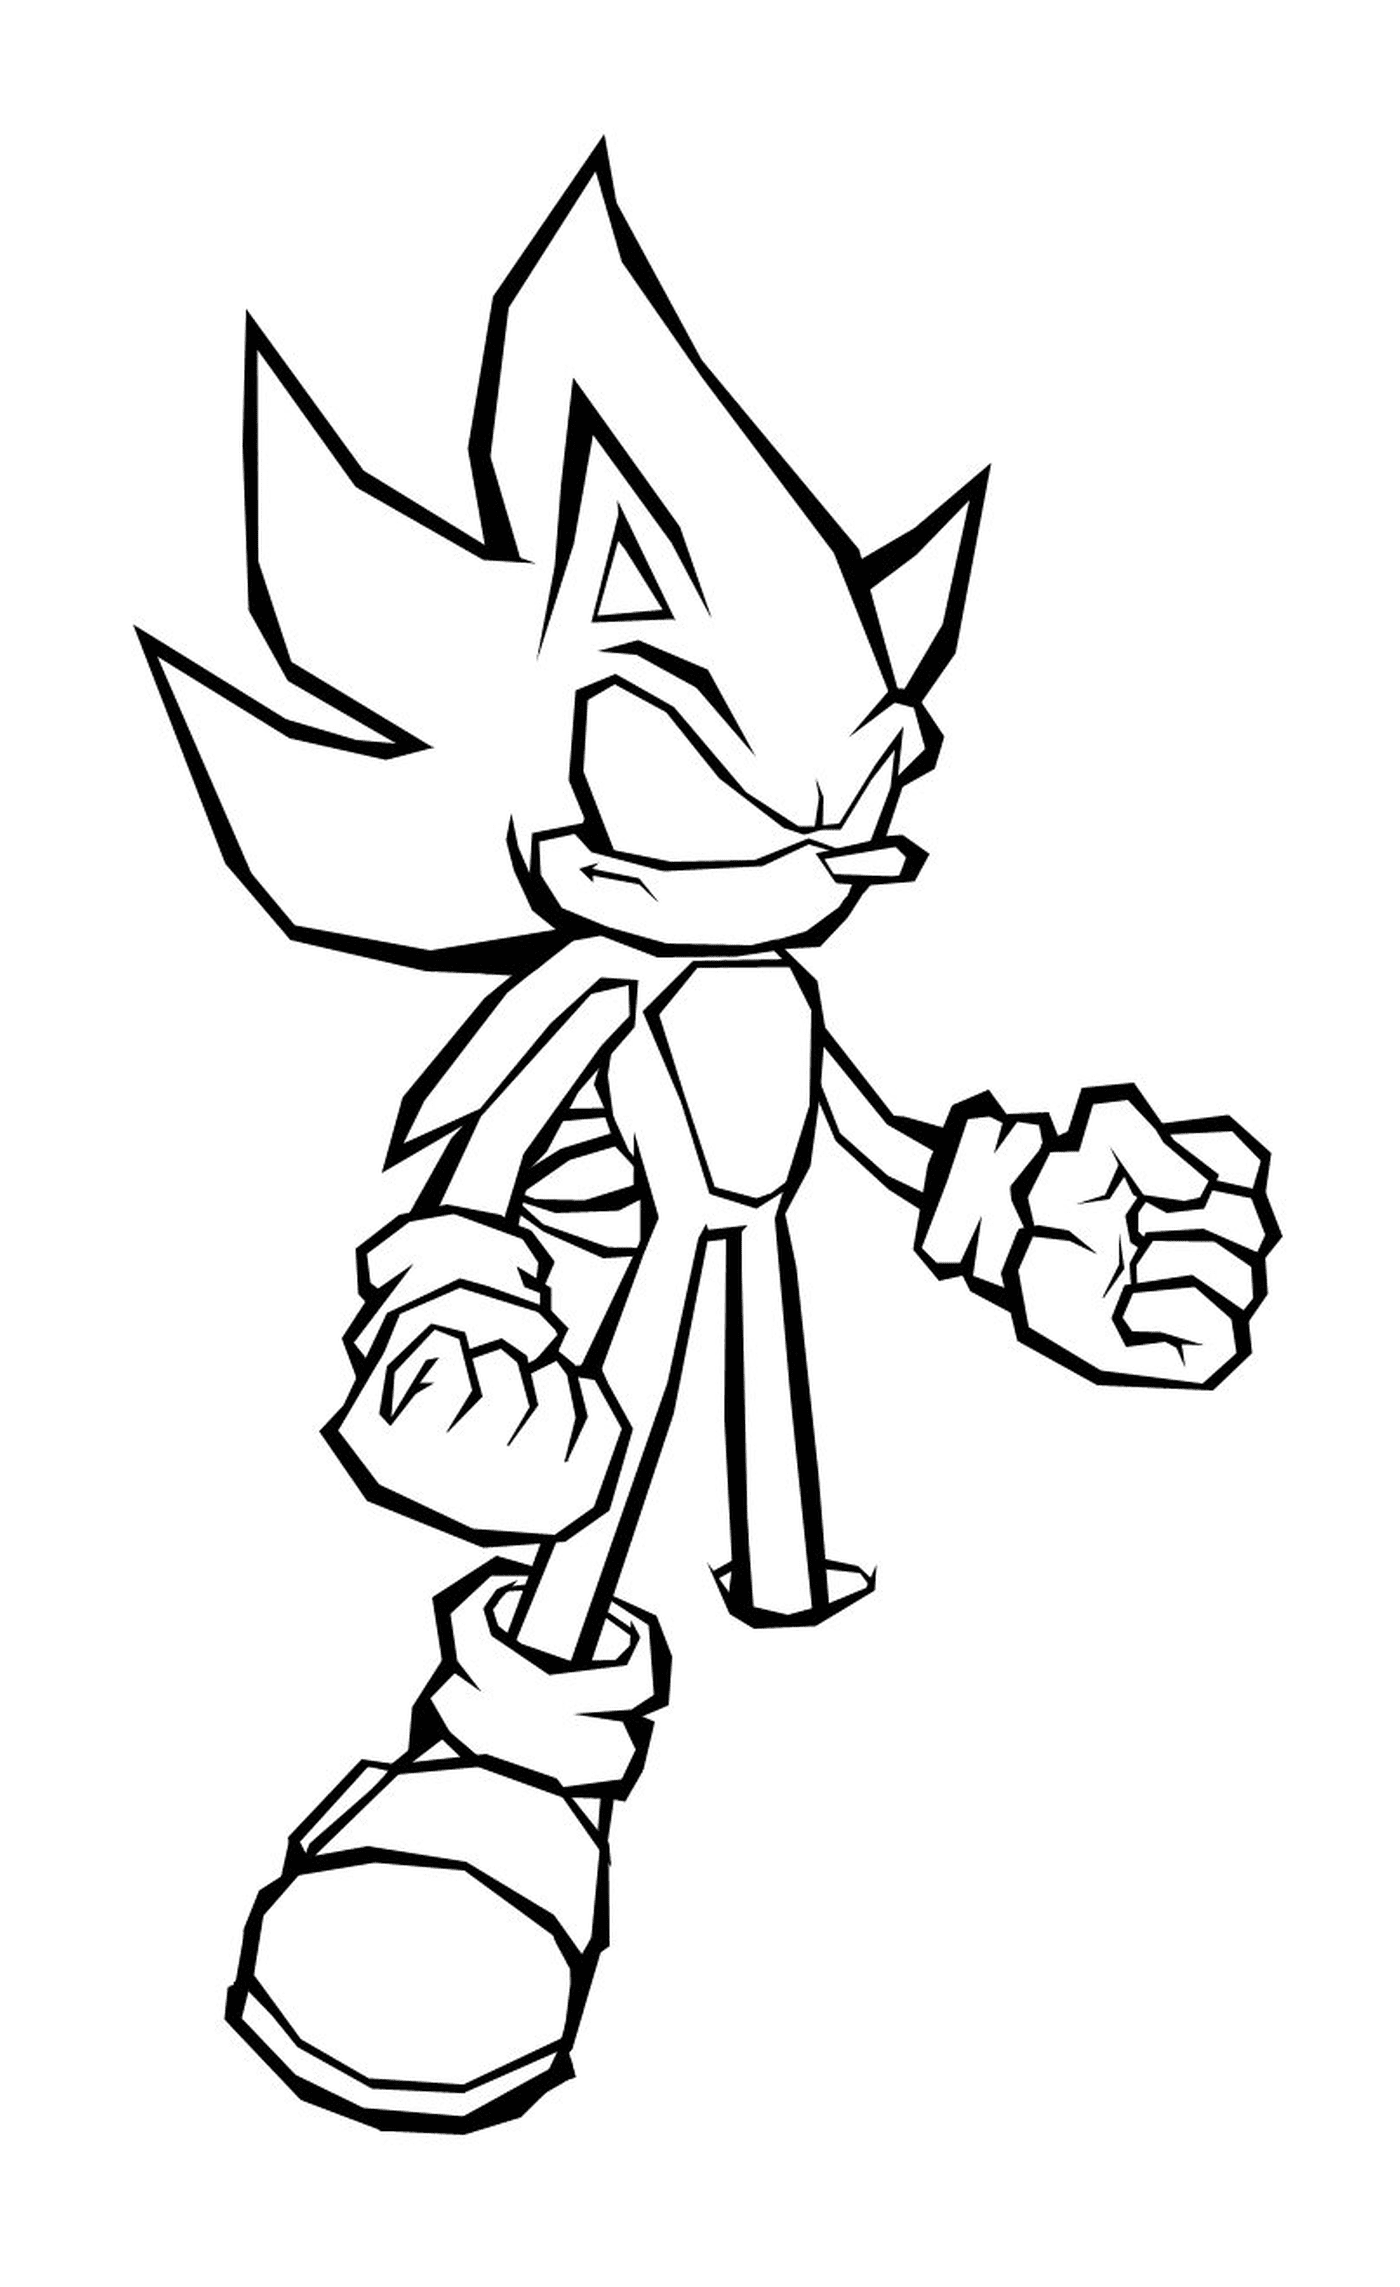  Potente Sonic 